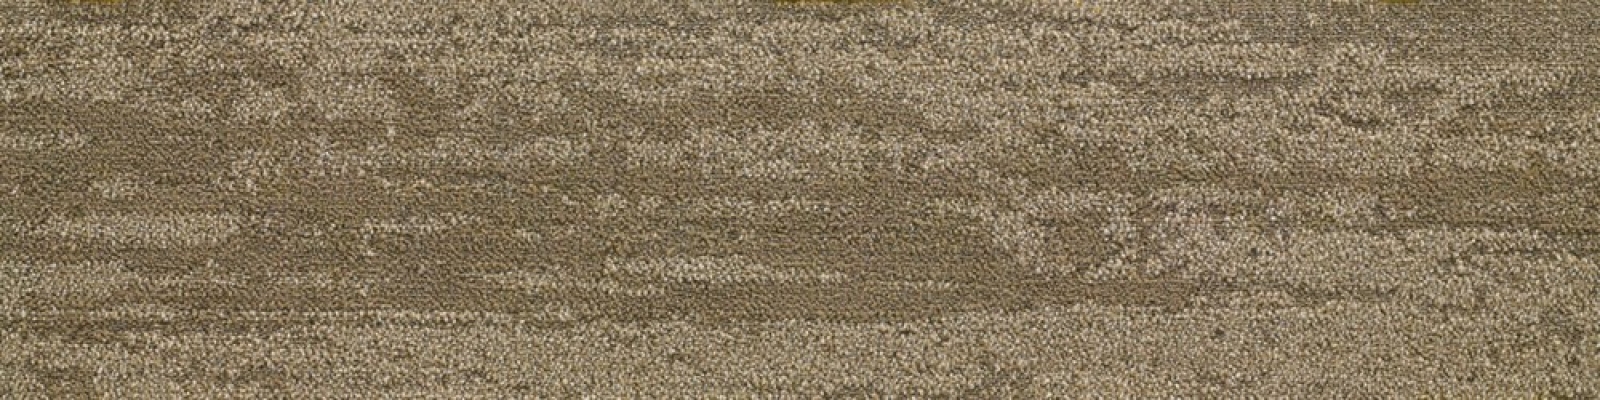 Carpet Tiles : Spacewalk-200-02